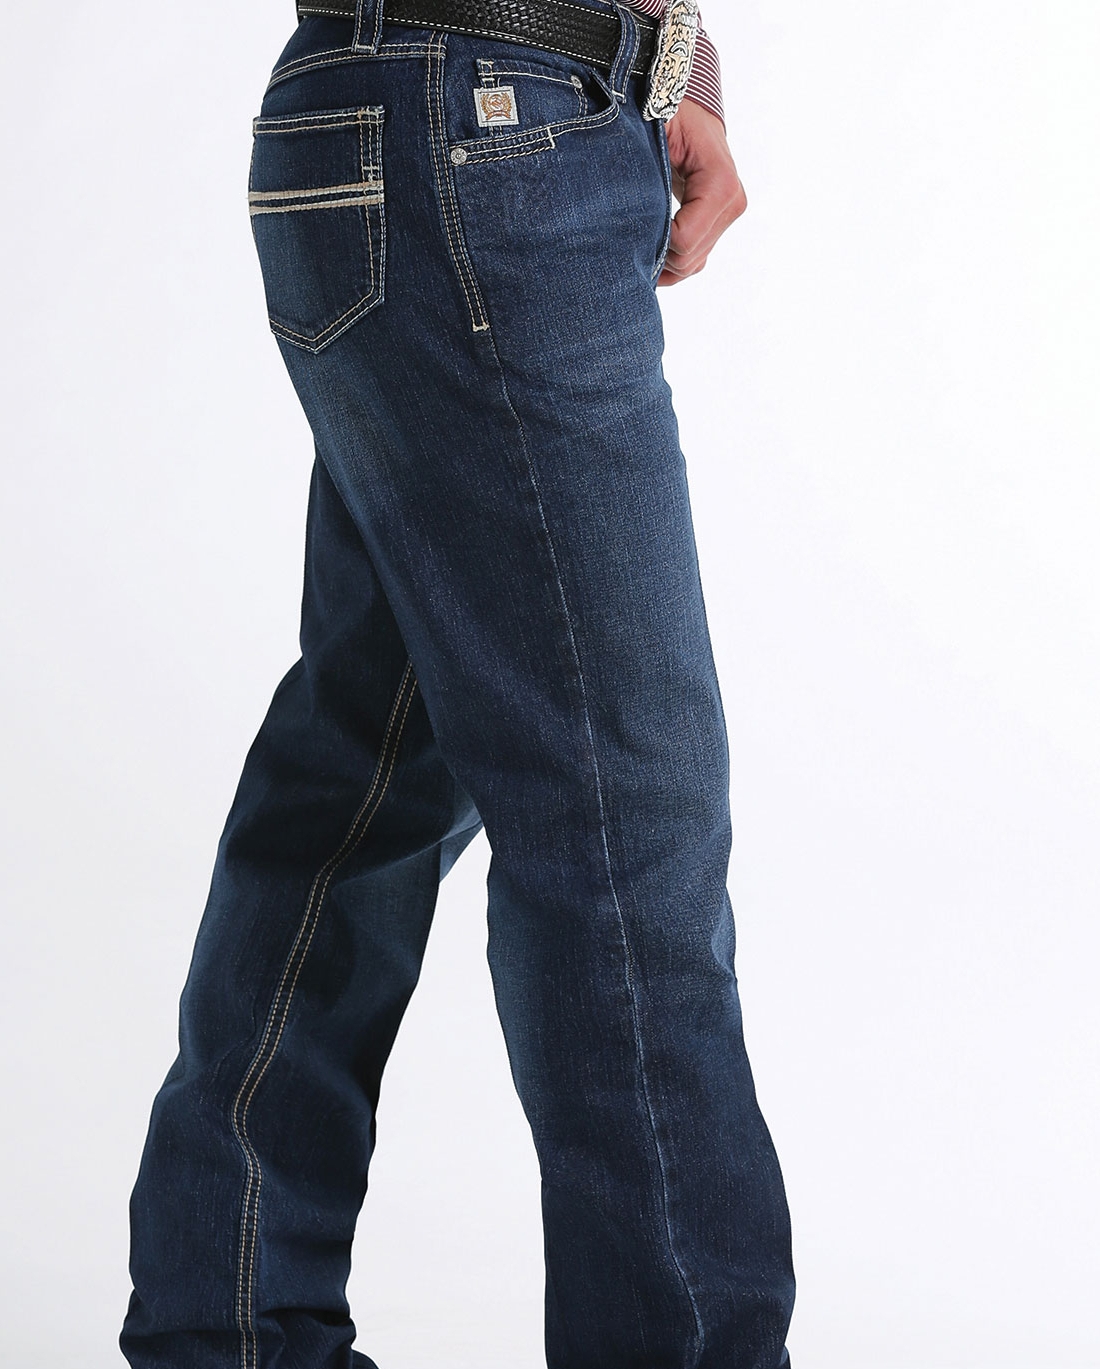 cinch carter jeans